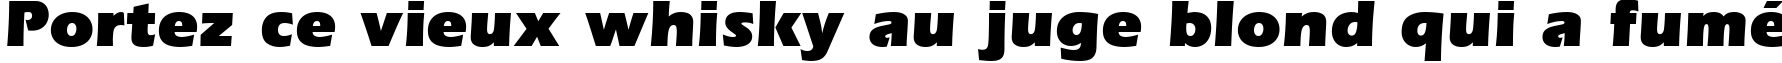 Пример написания шрифтом ErieBlack Bold текста на французском